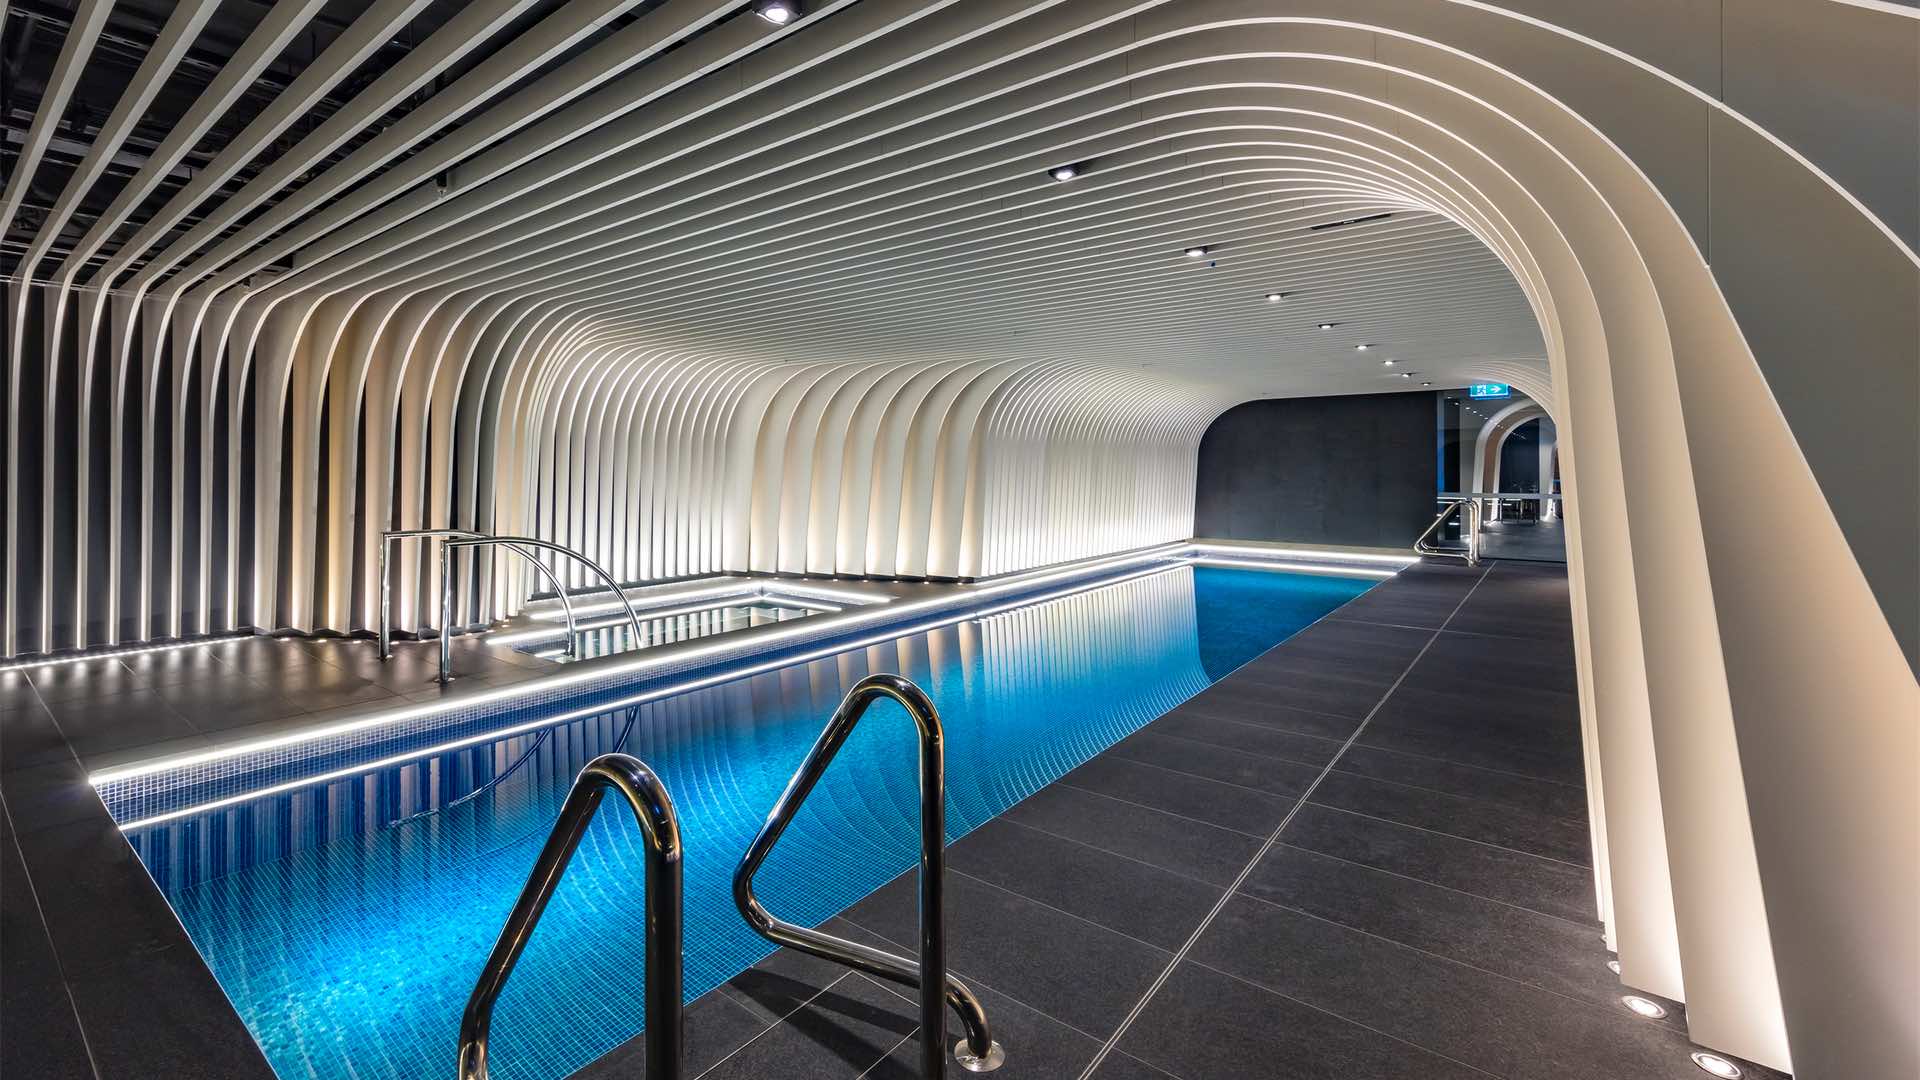 Sydney's Luxury New Skye Suites Hotel Has Just Opened Its Futuristic Doors